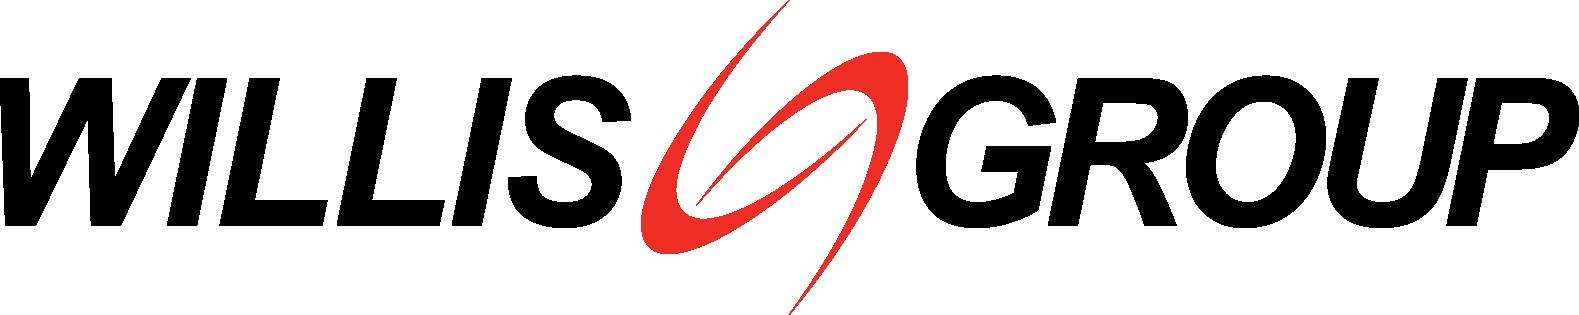 Willis Group's company logo